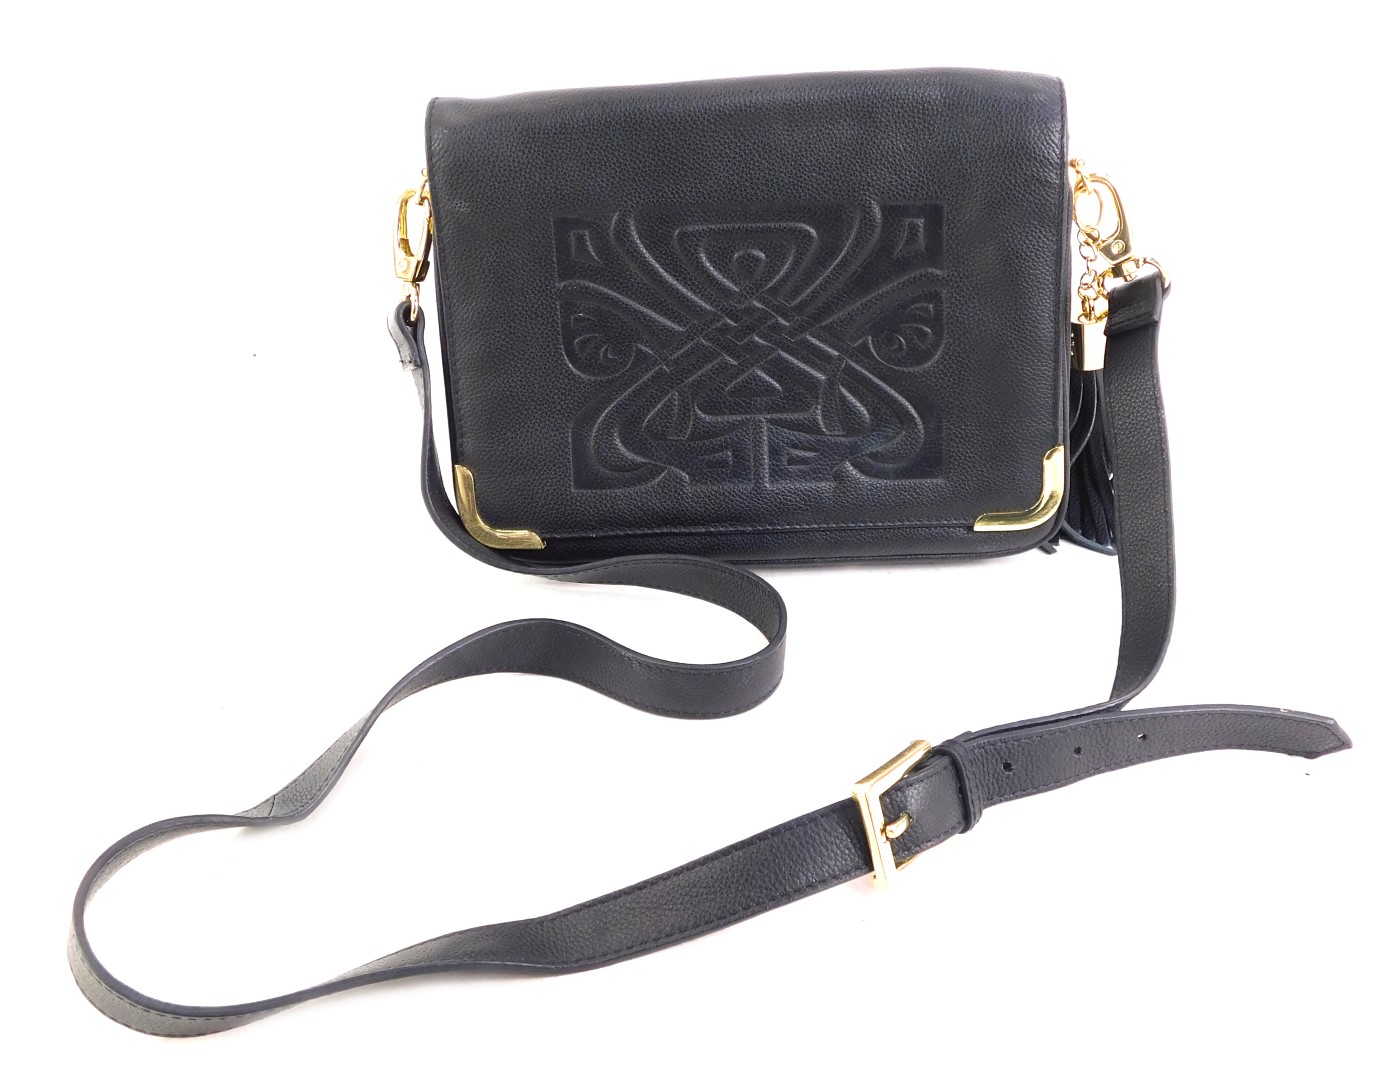 A Biba London black leather handbag, the front flap with heat press Biba logo, enclosing three